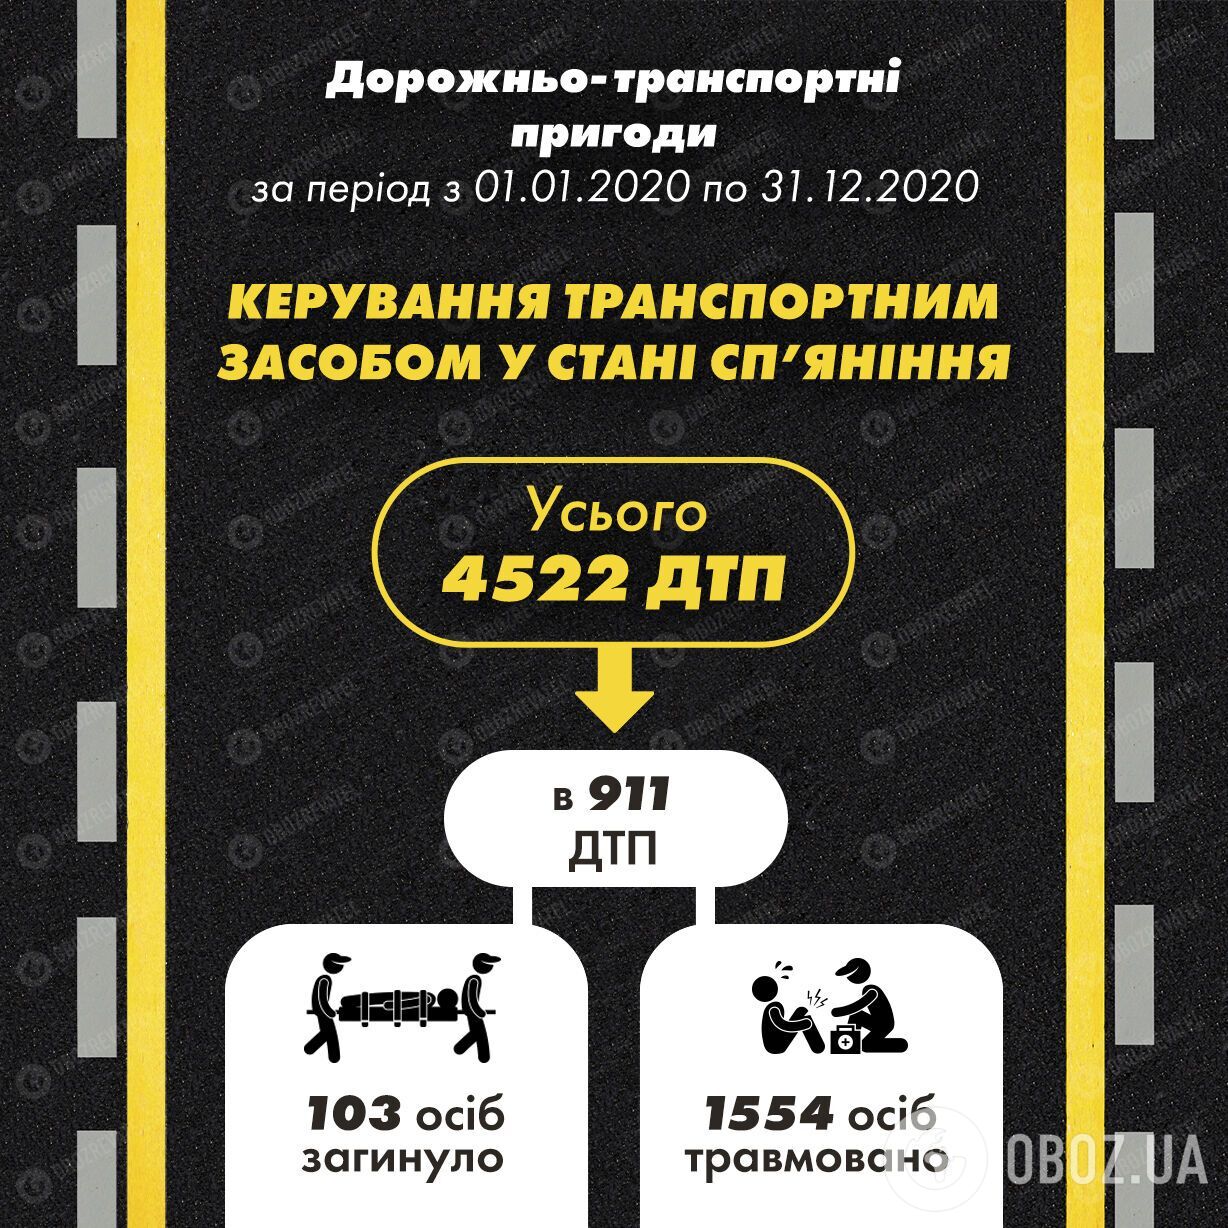 Статистика "пьяных" ДТП за 2020 год.